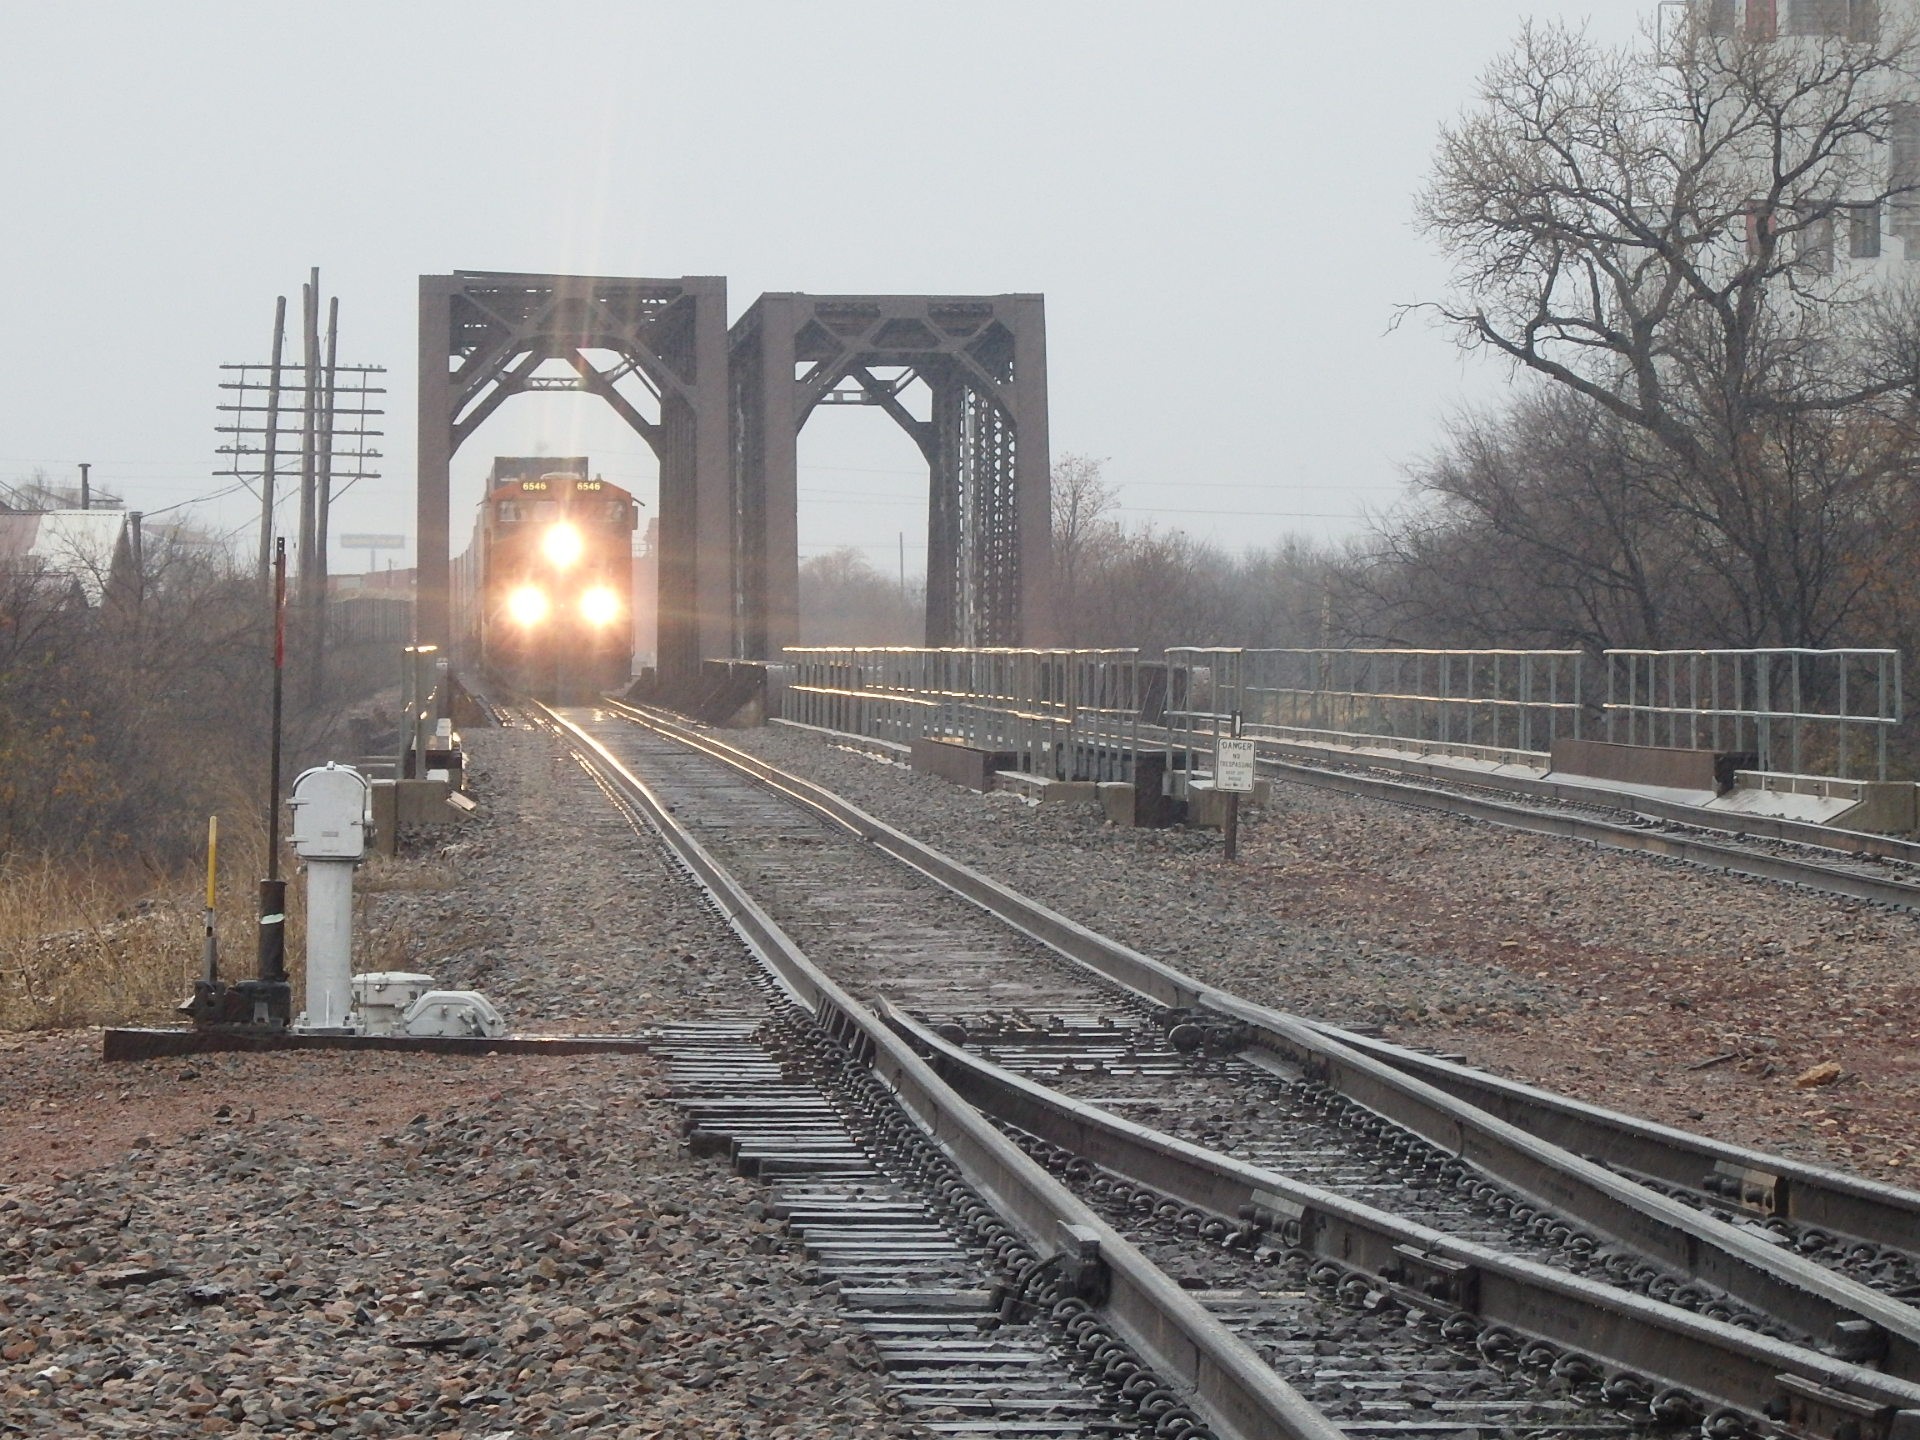 Foto: tren de Burlington Northern & Santa Fe - Wichita Falls (Texas), Estados Unidos